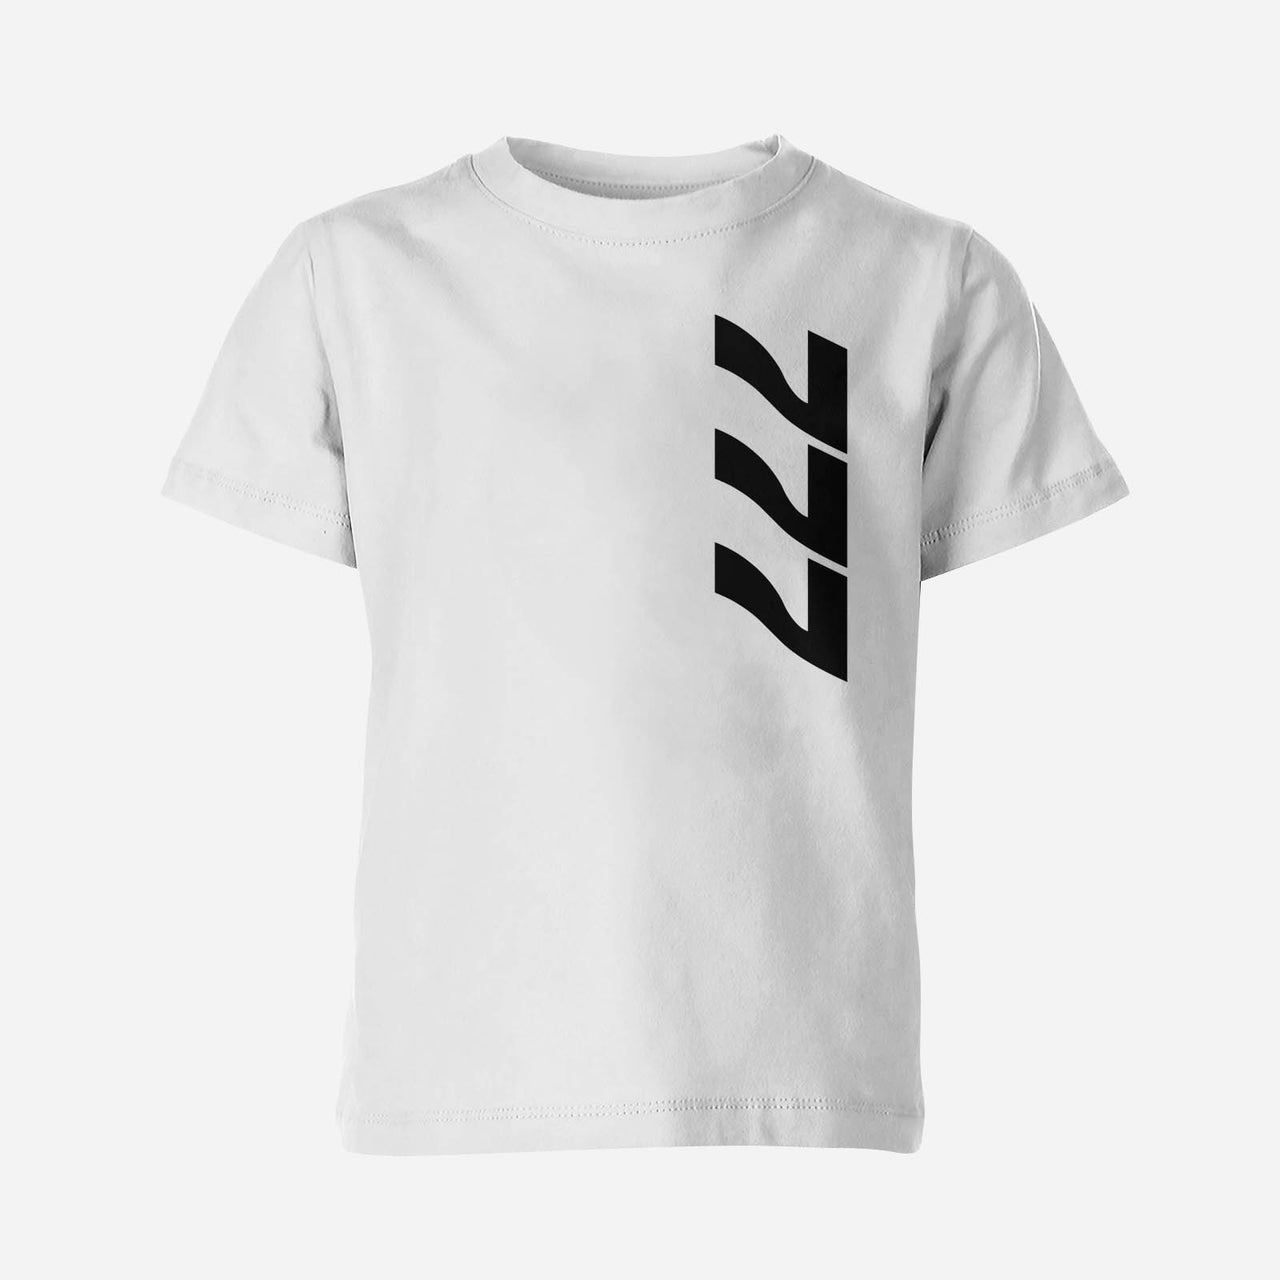 777 Side Text Designed Children T-Shirts